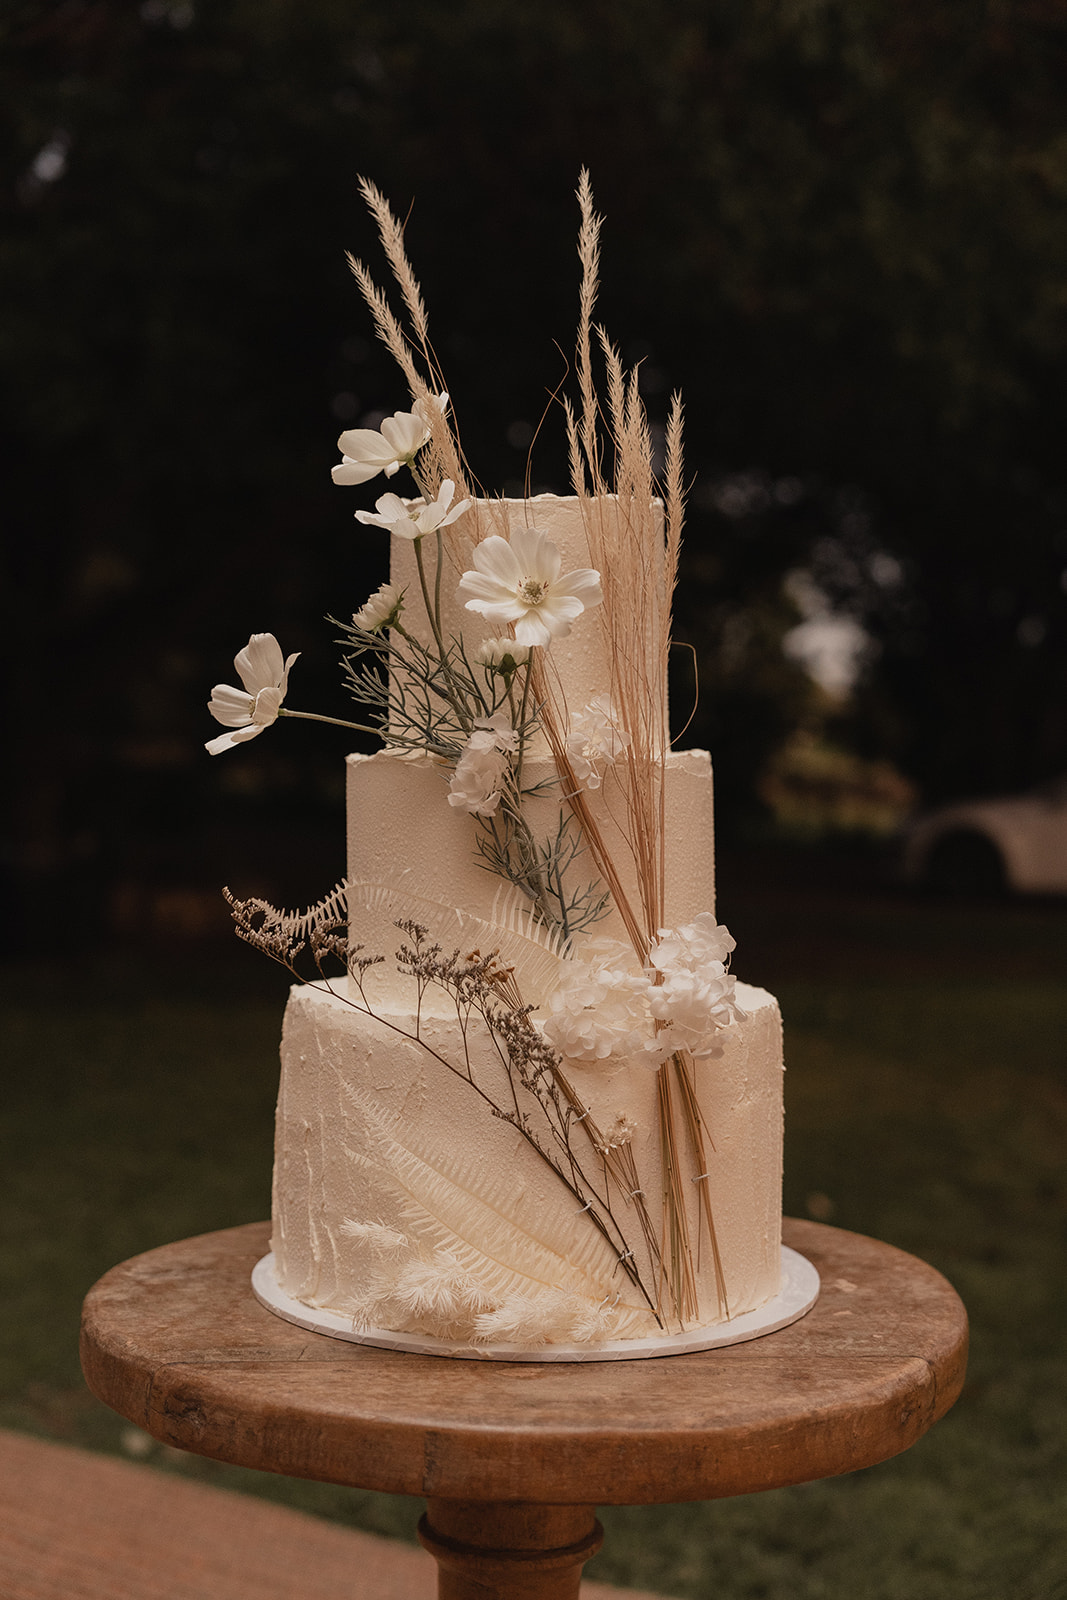 Brisbane editorial backyard wedding photography, Cake